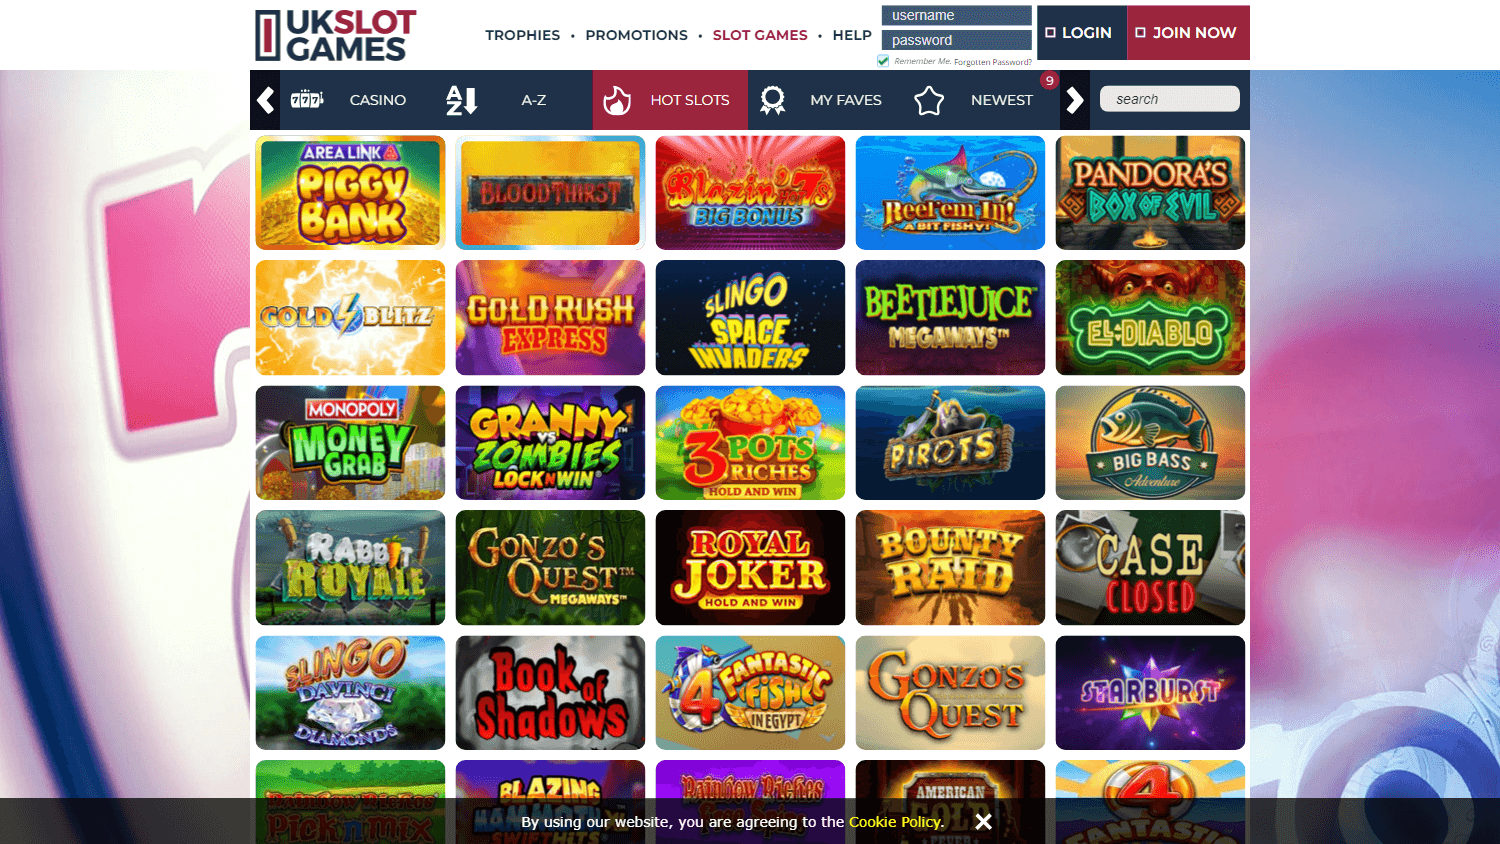 uk_slot_games_casino_game_gallery_desktop